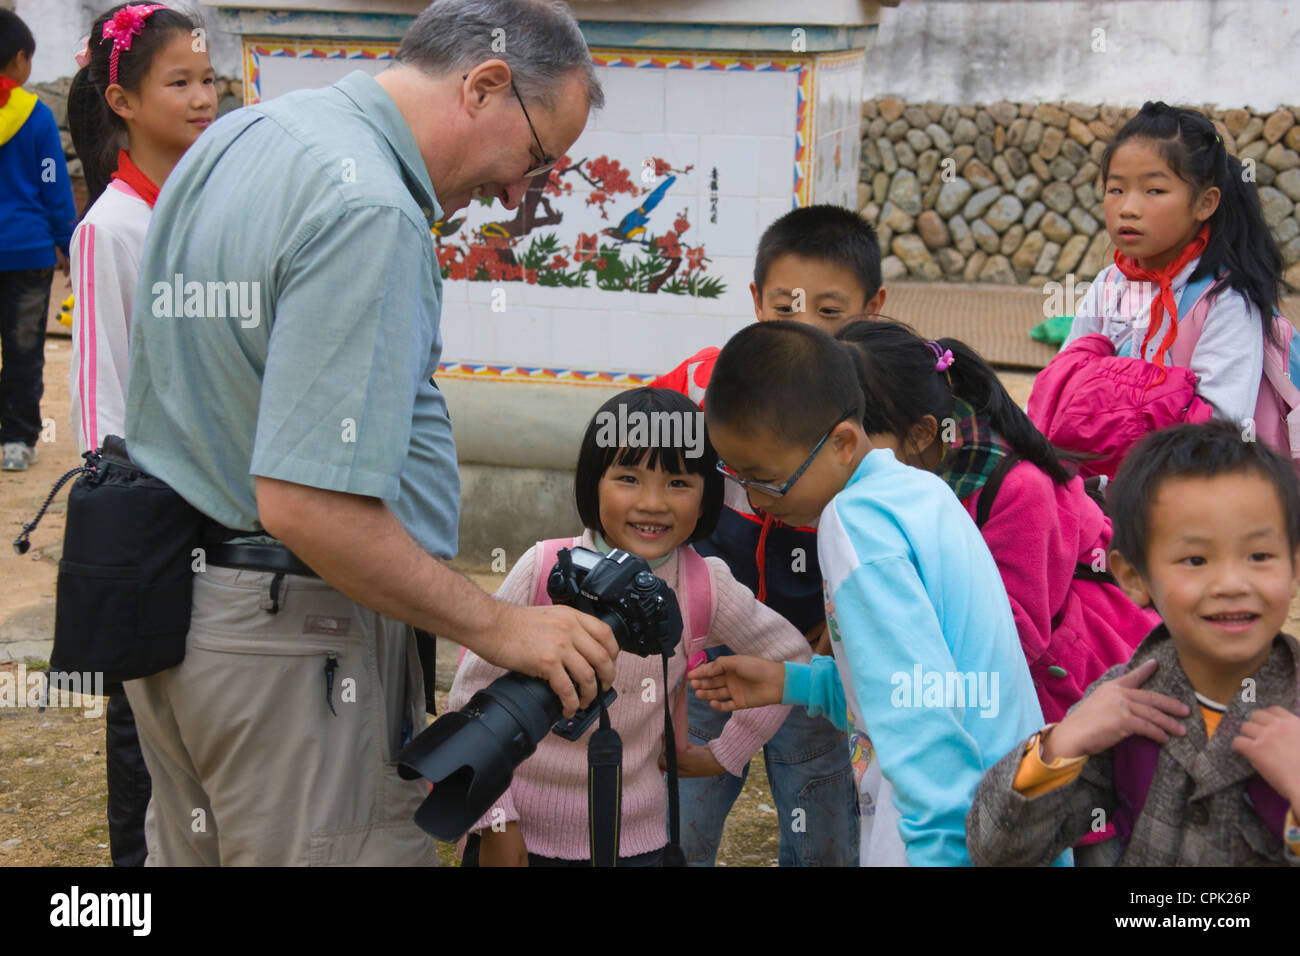 Tourist showing photos on digital camera to local children, Fujian, China Stock Photo